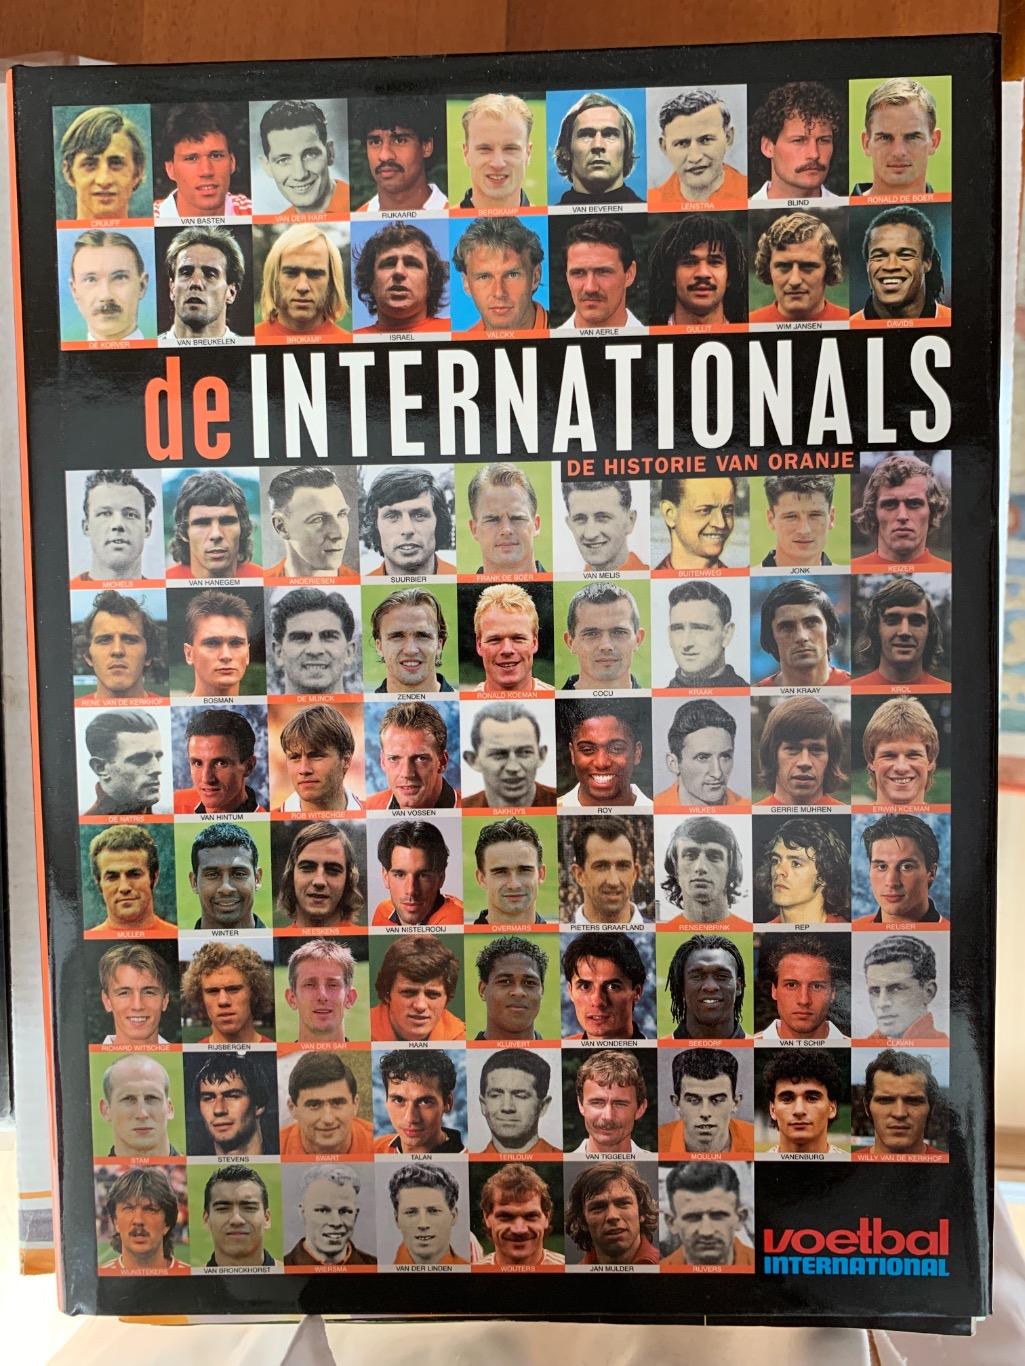 Voetbal international энциклопедия голландского футбола